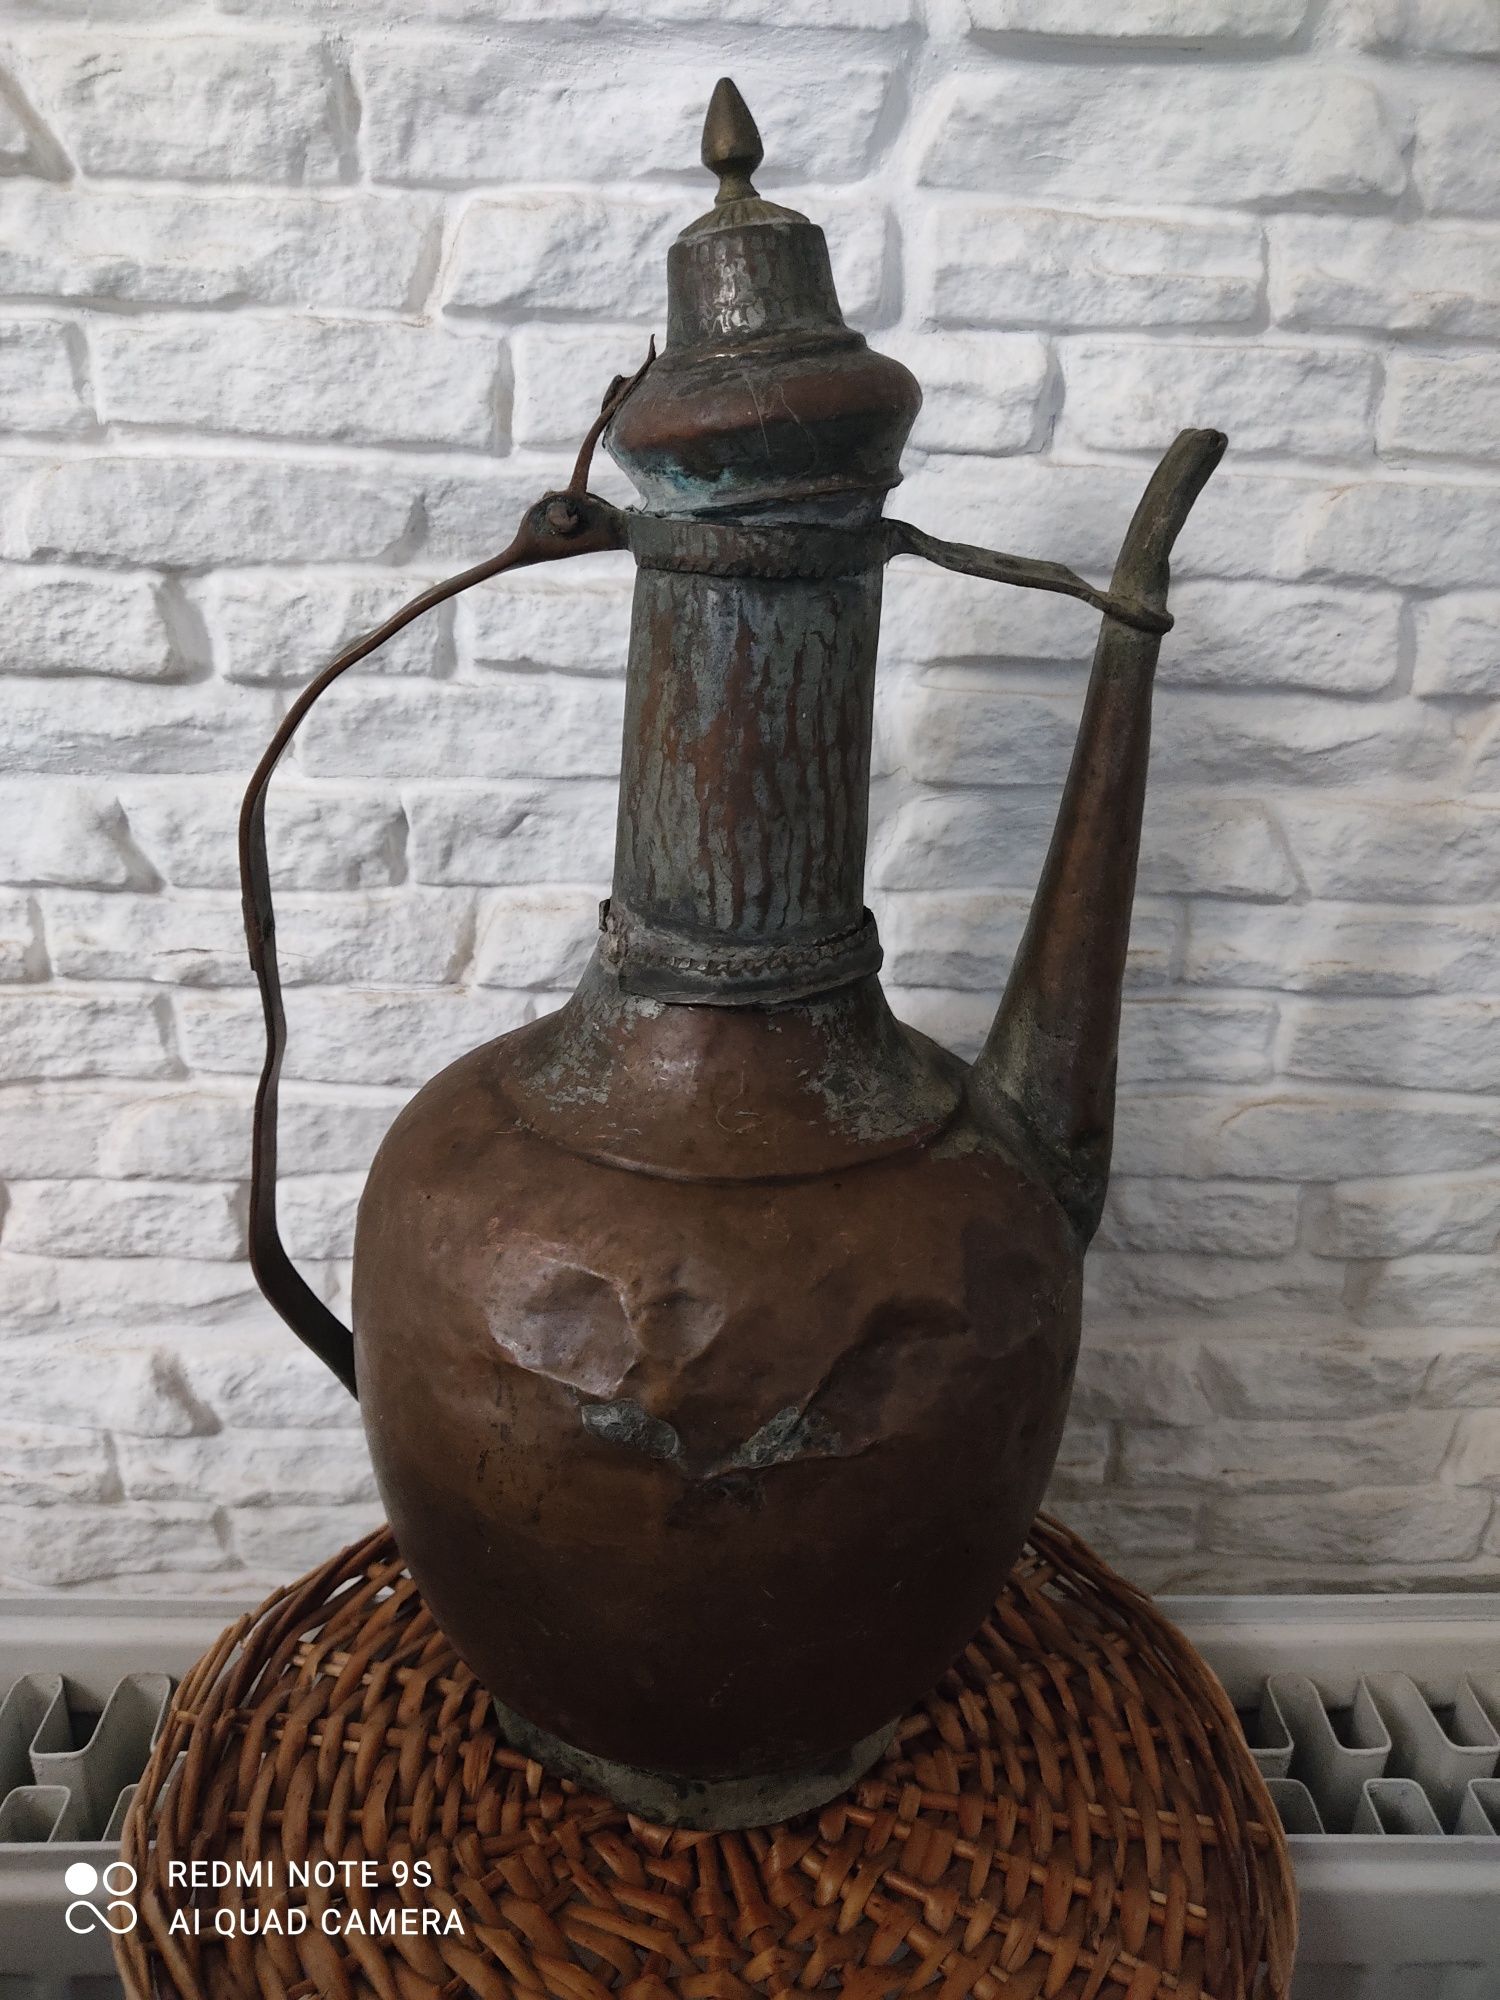 Антични медни и бронзови предмети ибрик везна хаван чайник съдове